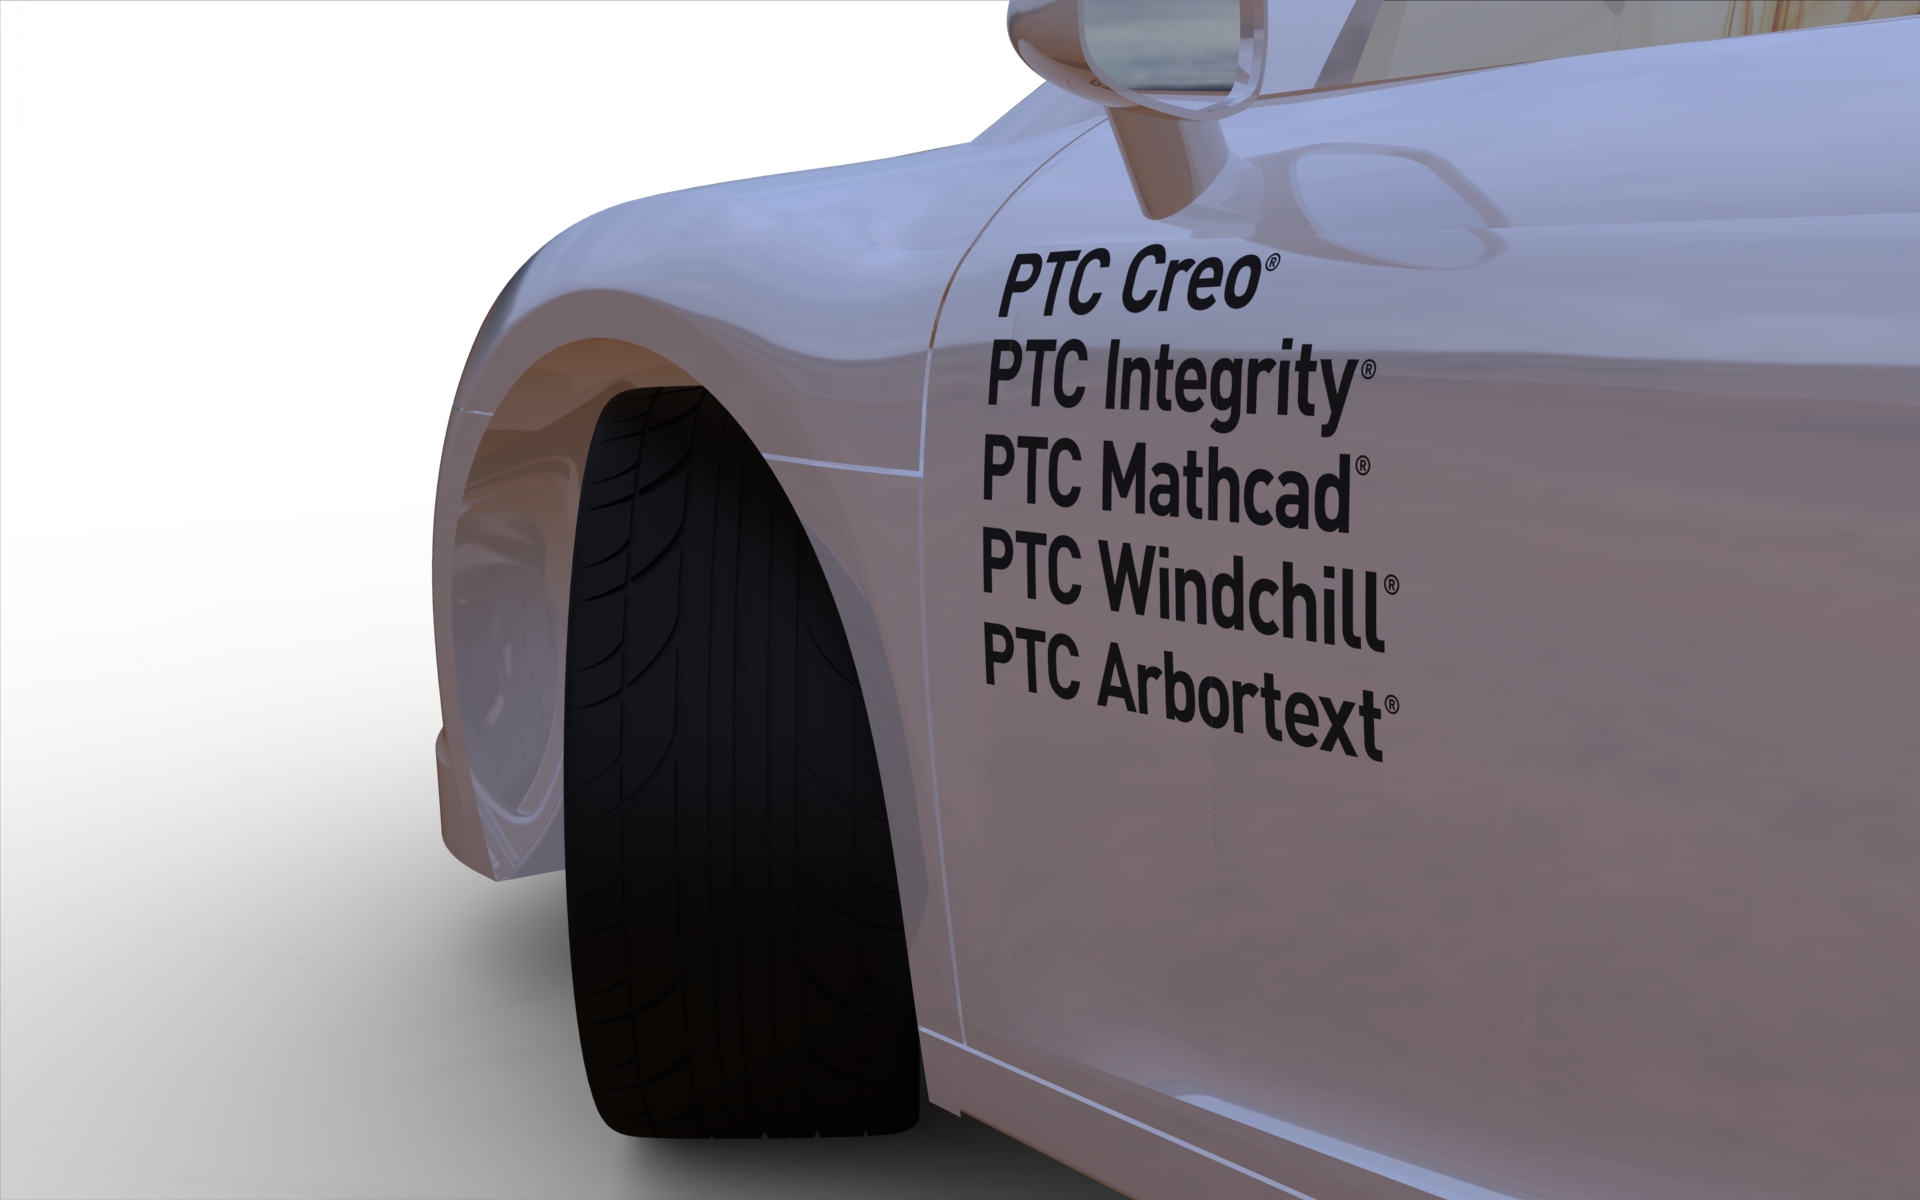 New PTC Product Names and Logos_b.jpg